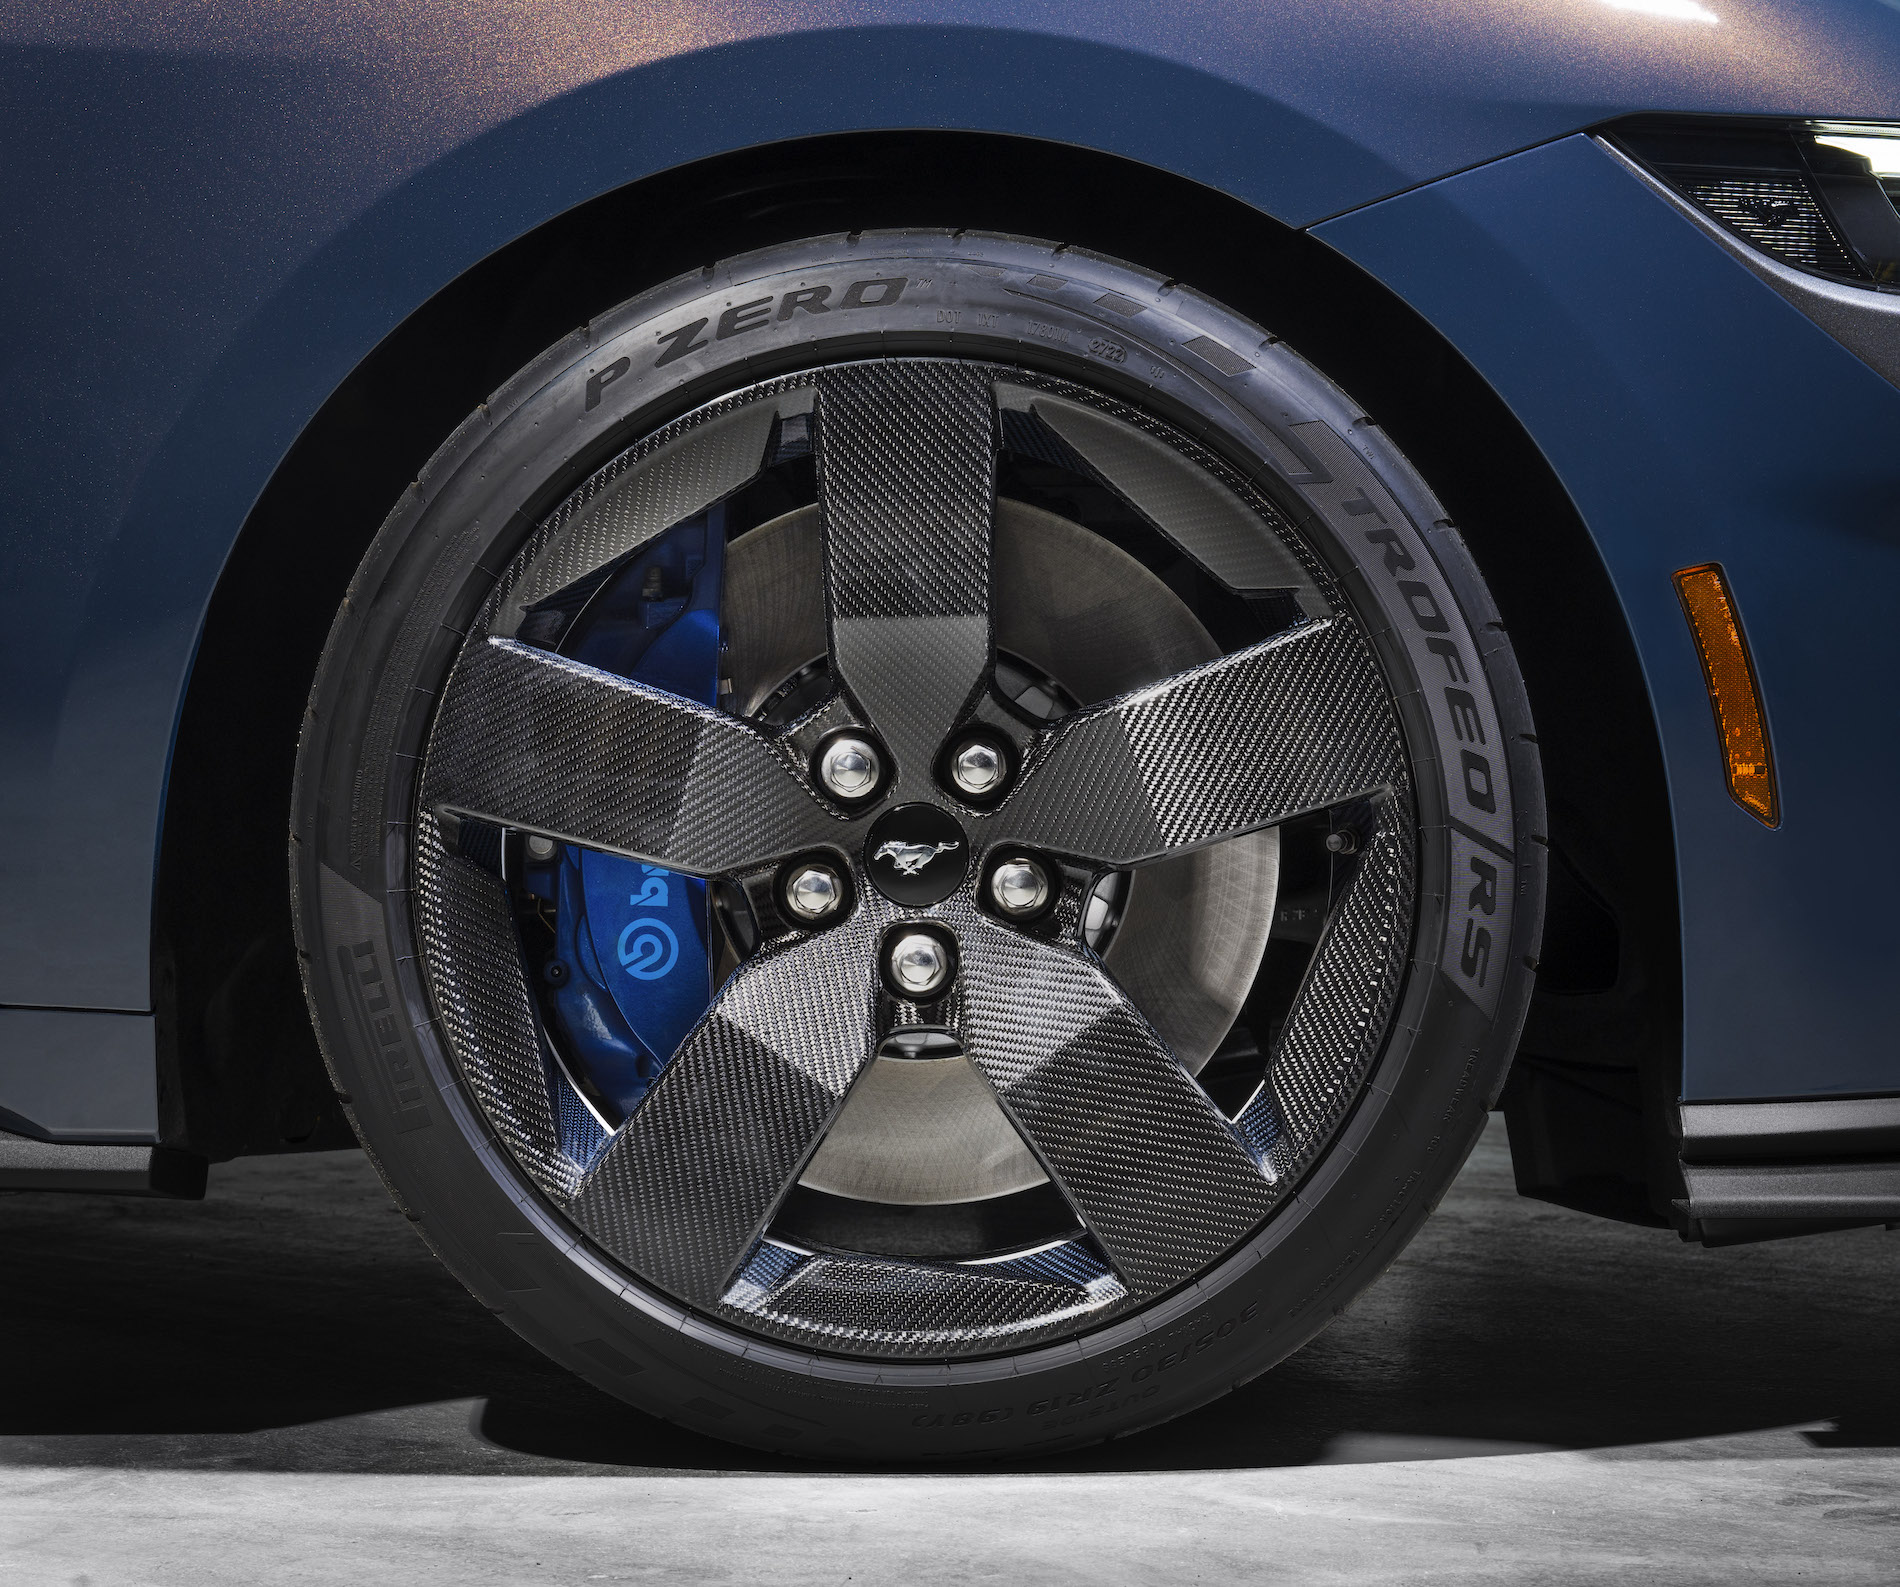 S650 Mustang Carbon Fiber Wheels on Dark Horse Mustang – First Look! Mustang Dark Horse Carbon Fiber Wheels_05